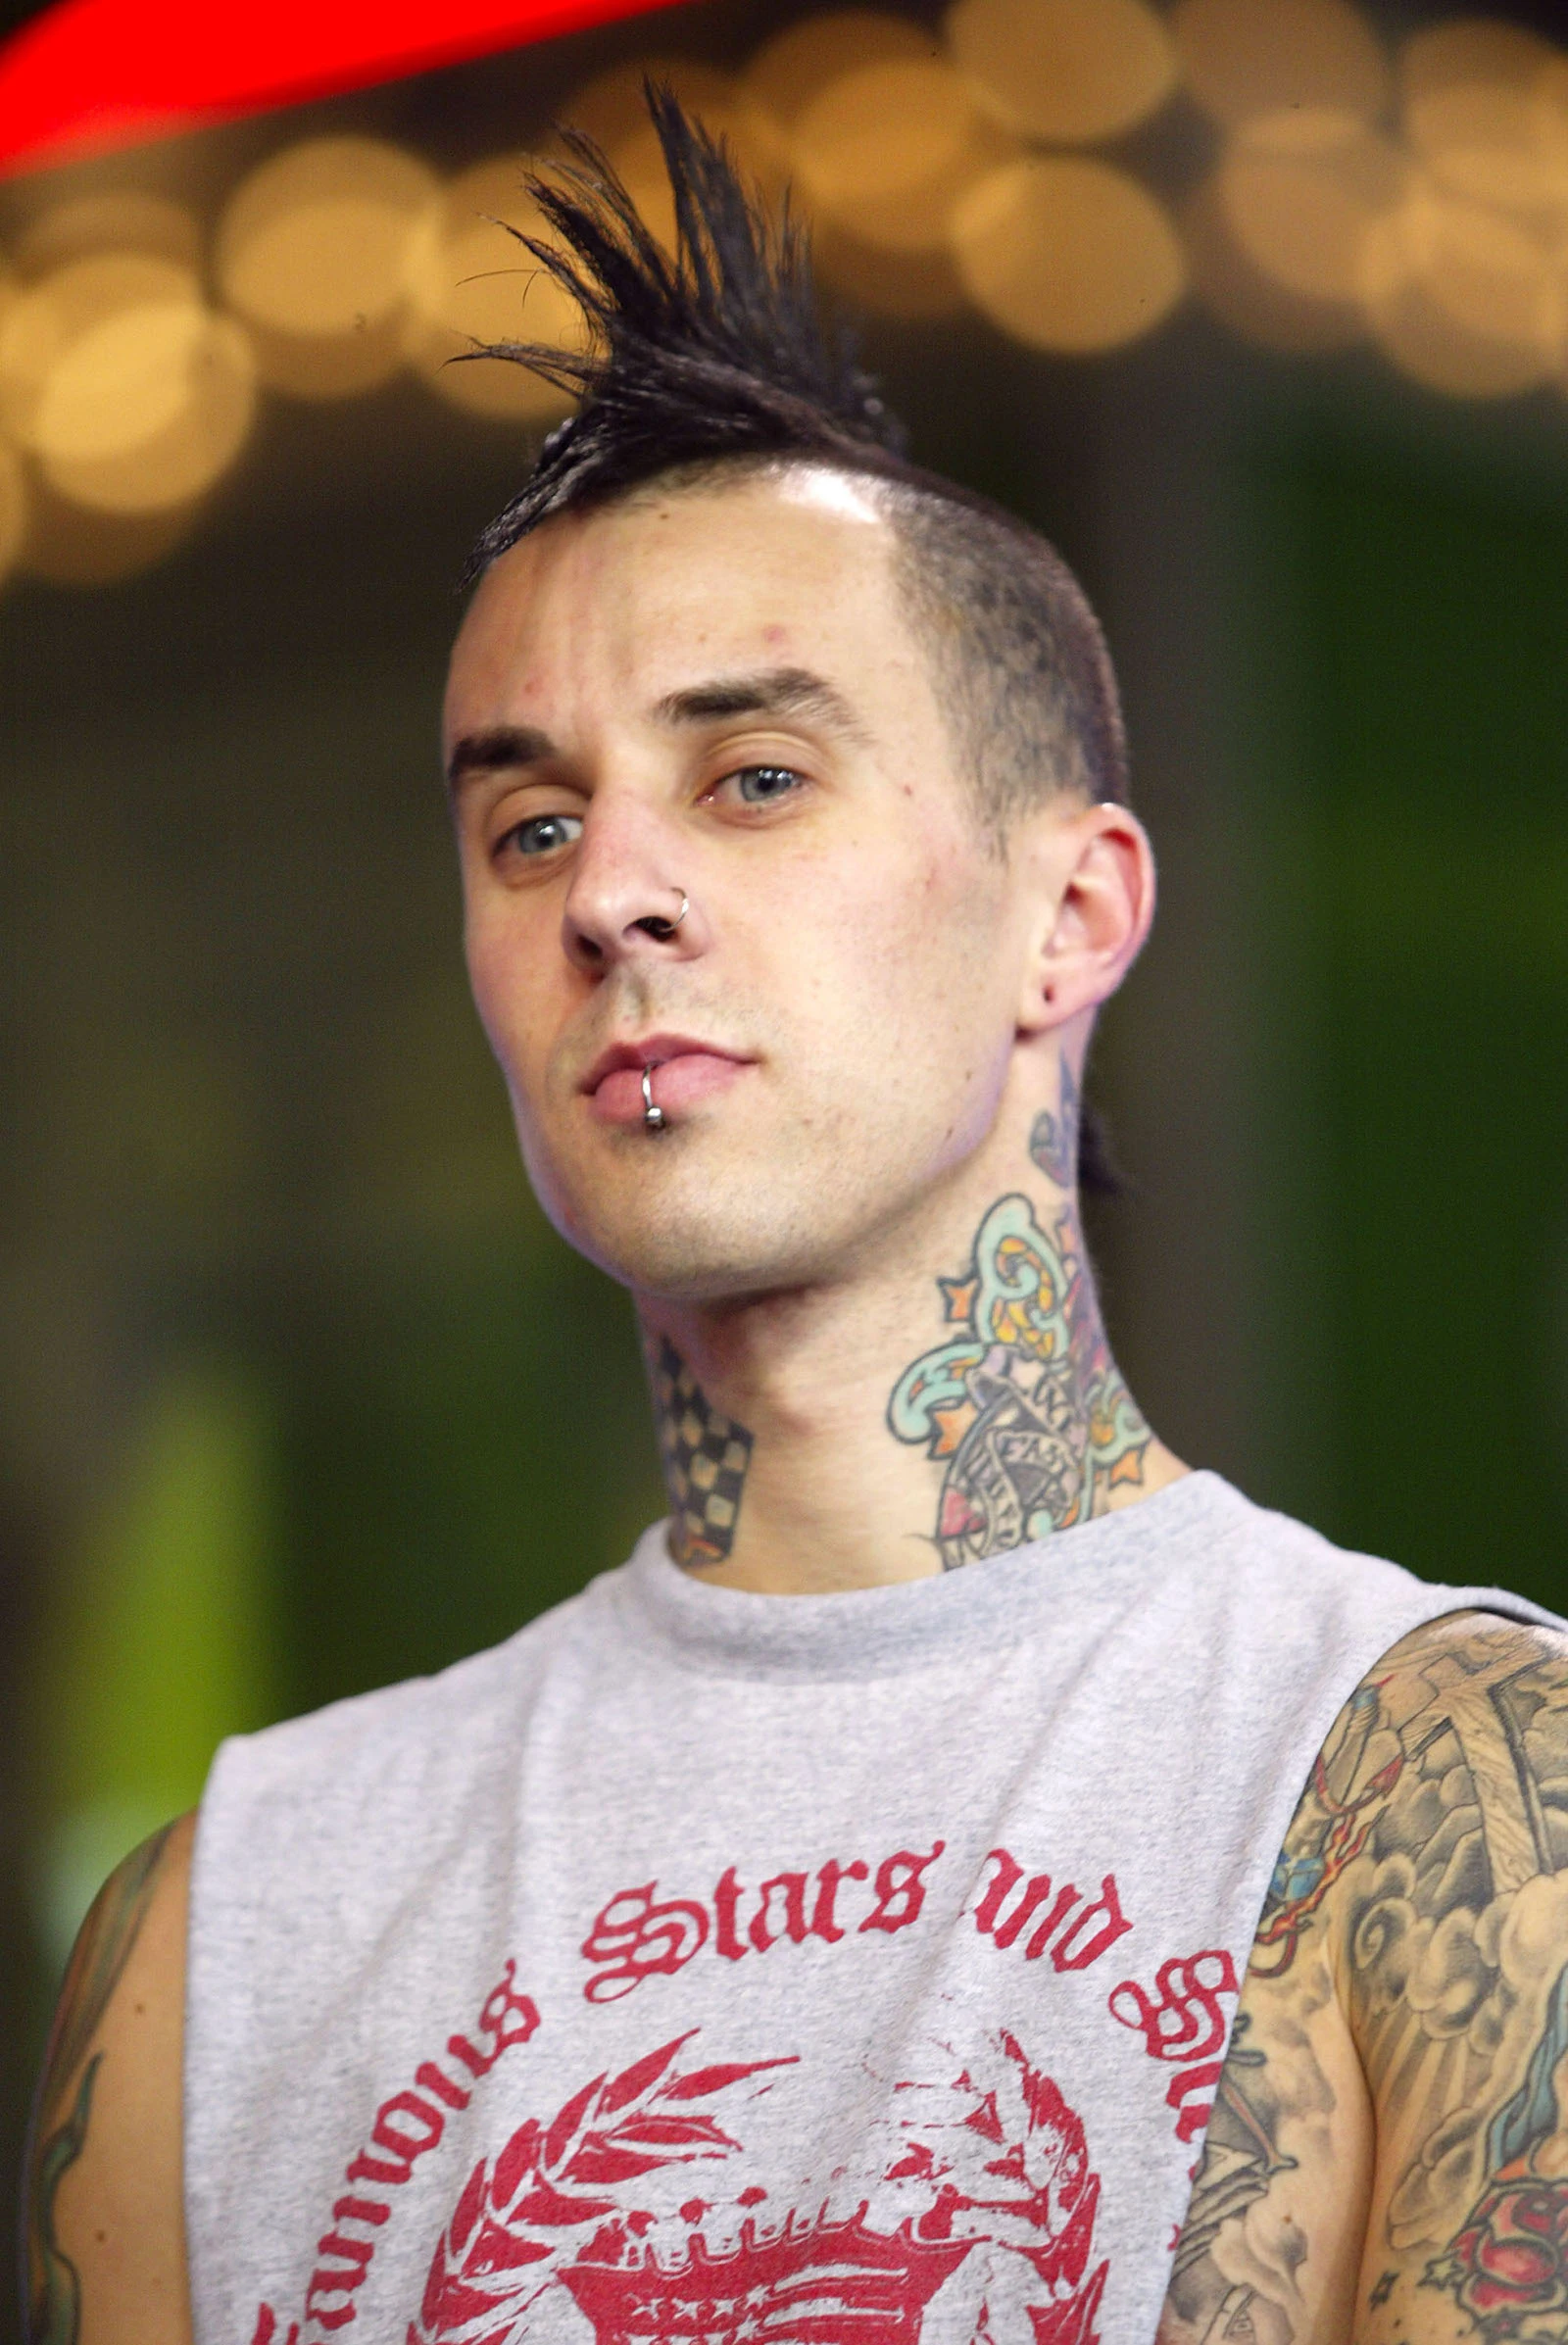 Panic at the disco tattoo | Tattoos, Subtle tattoos, Brendon urie tattoos